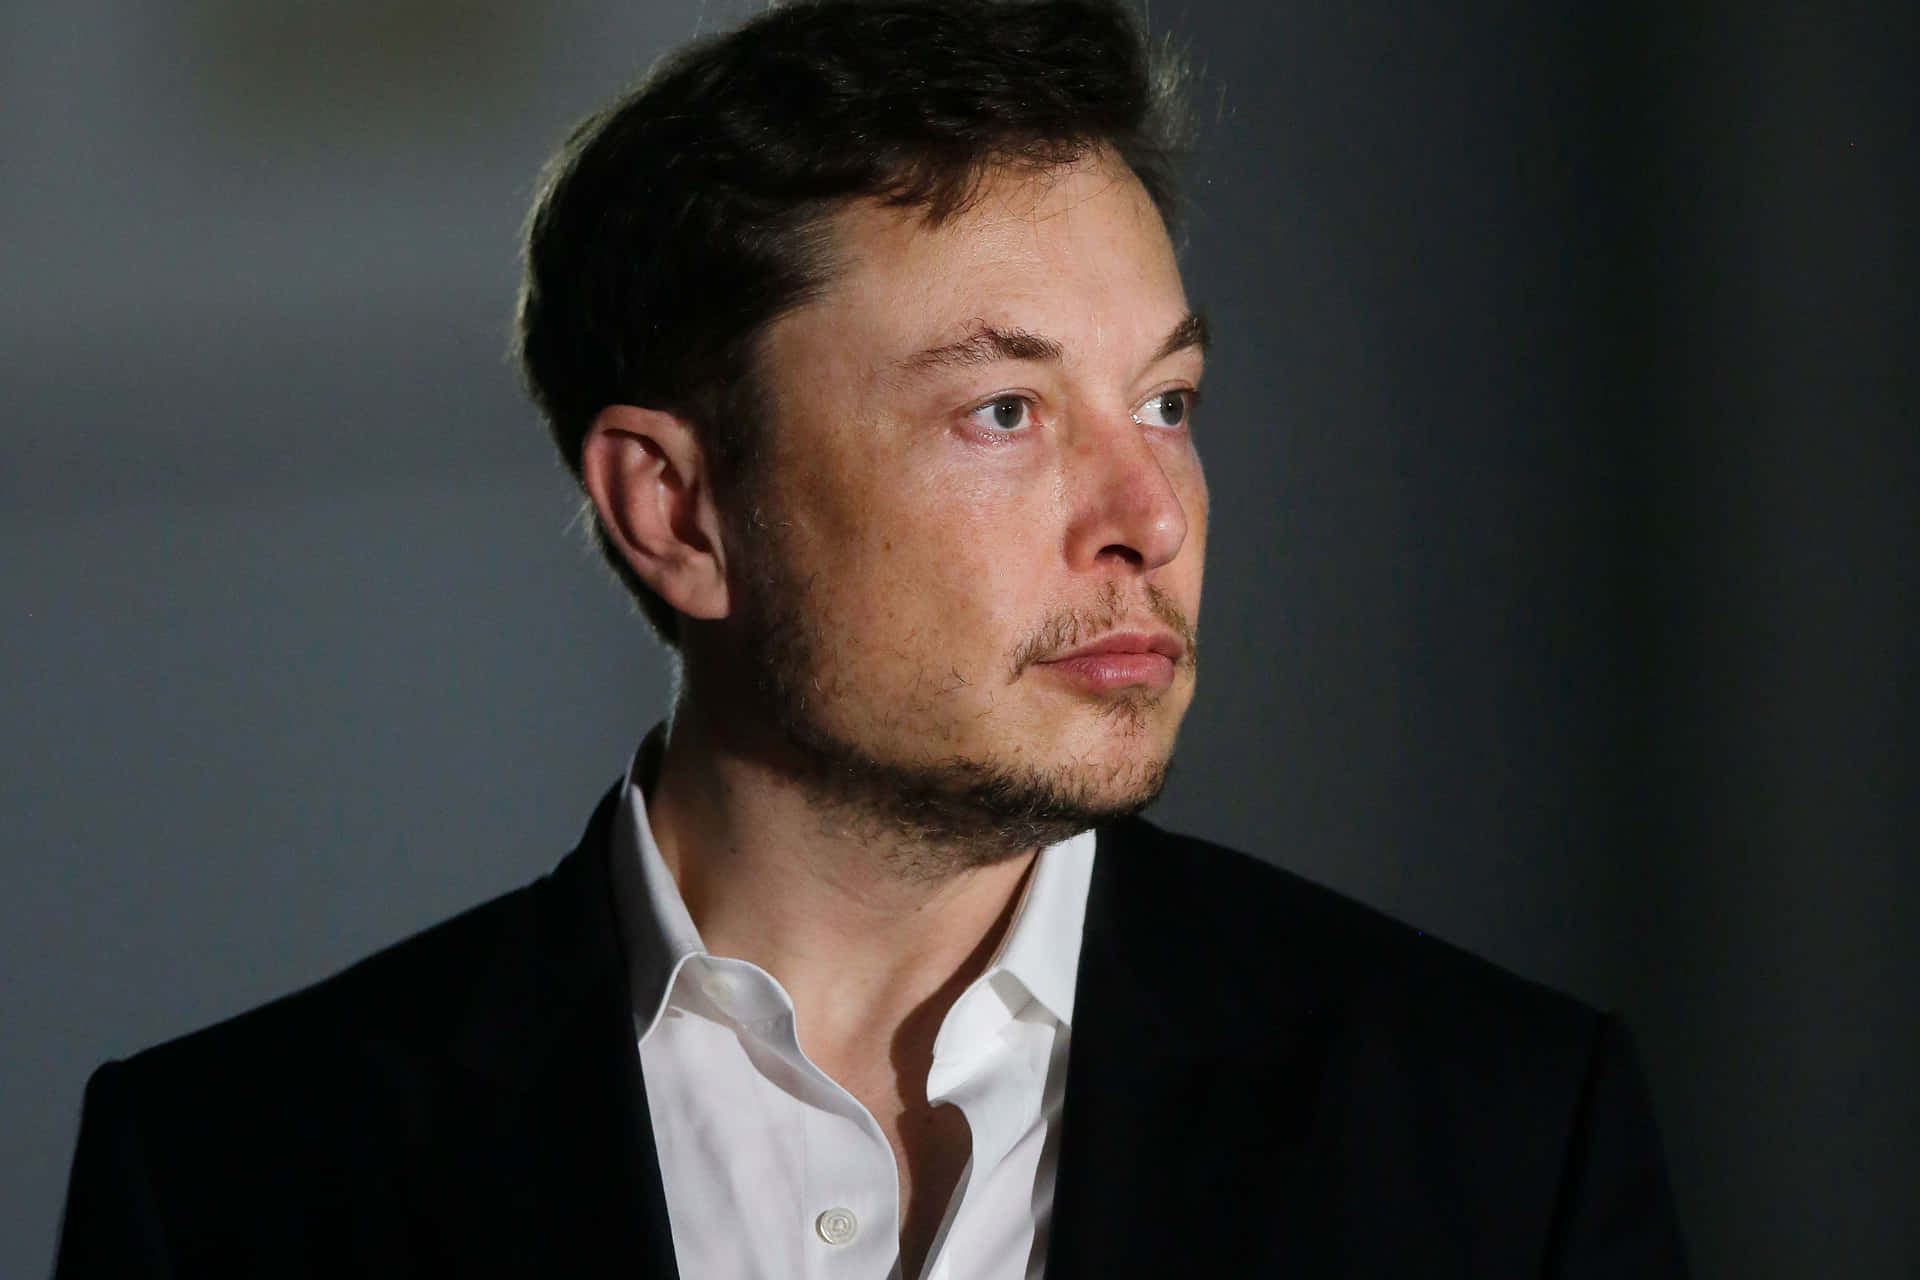 Visionärerunternehmer Elon Musk